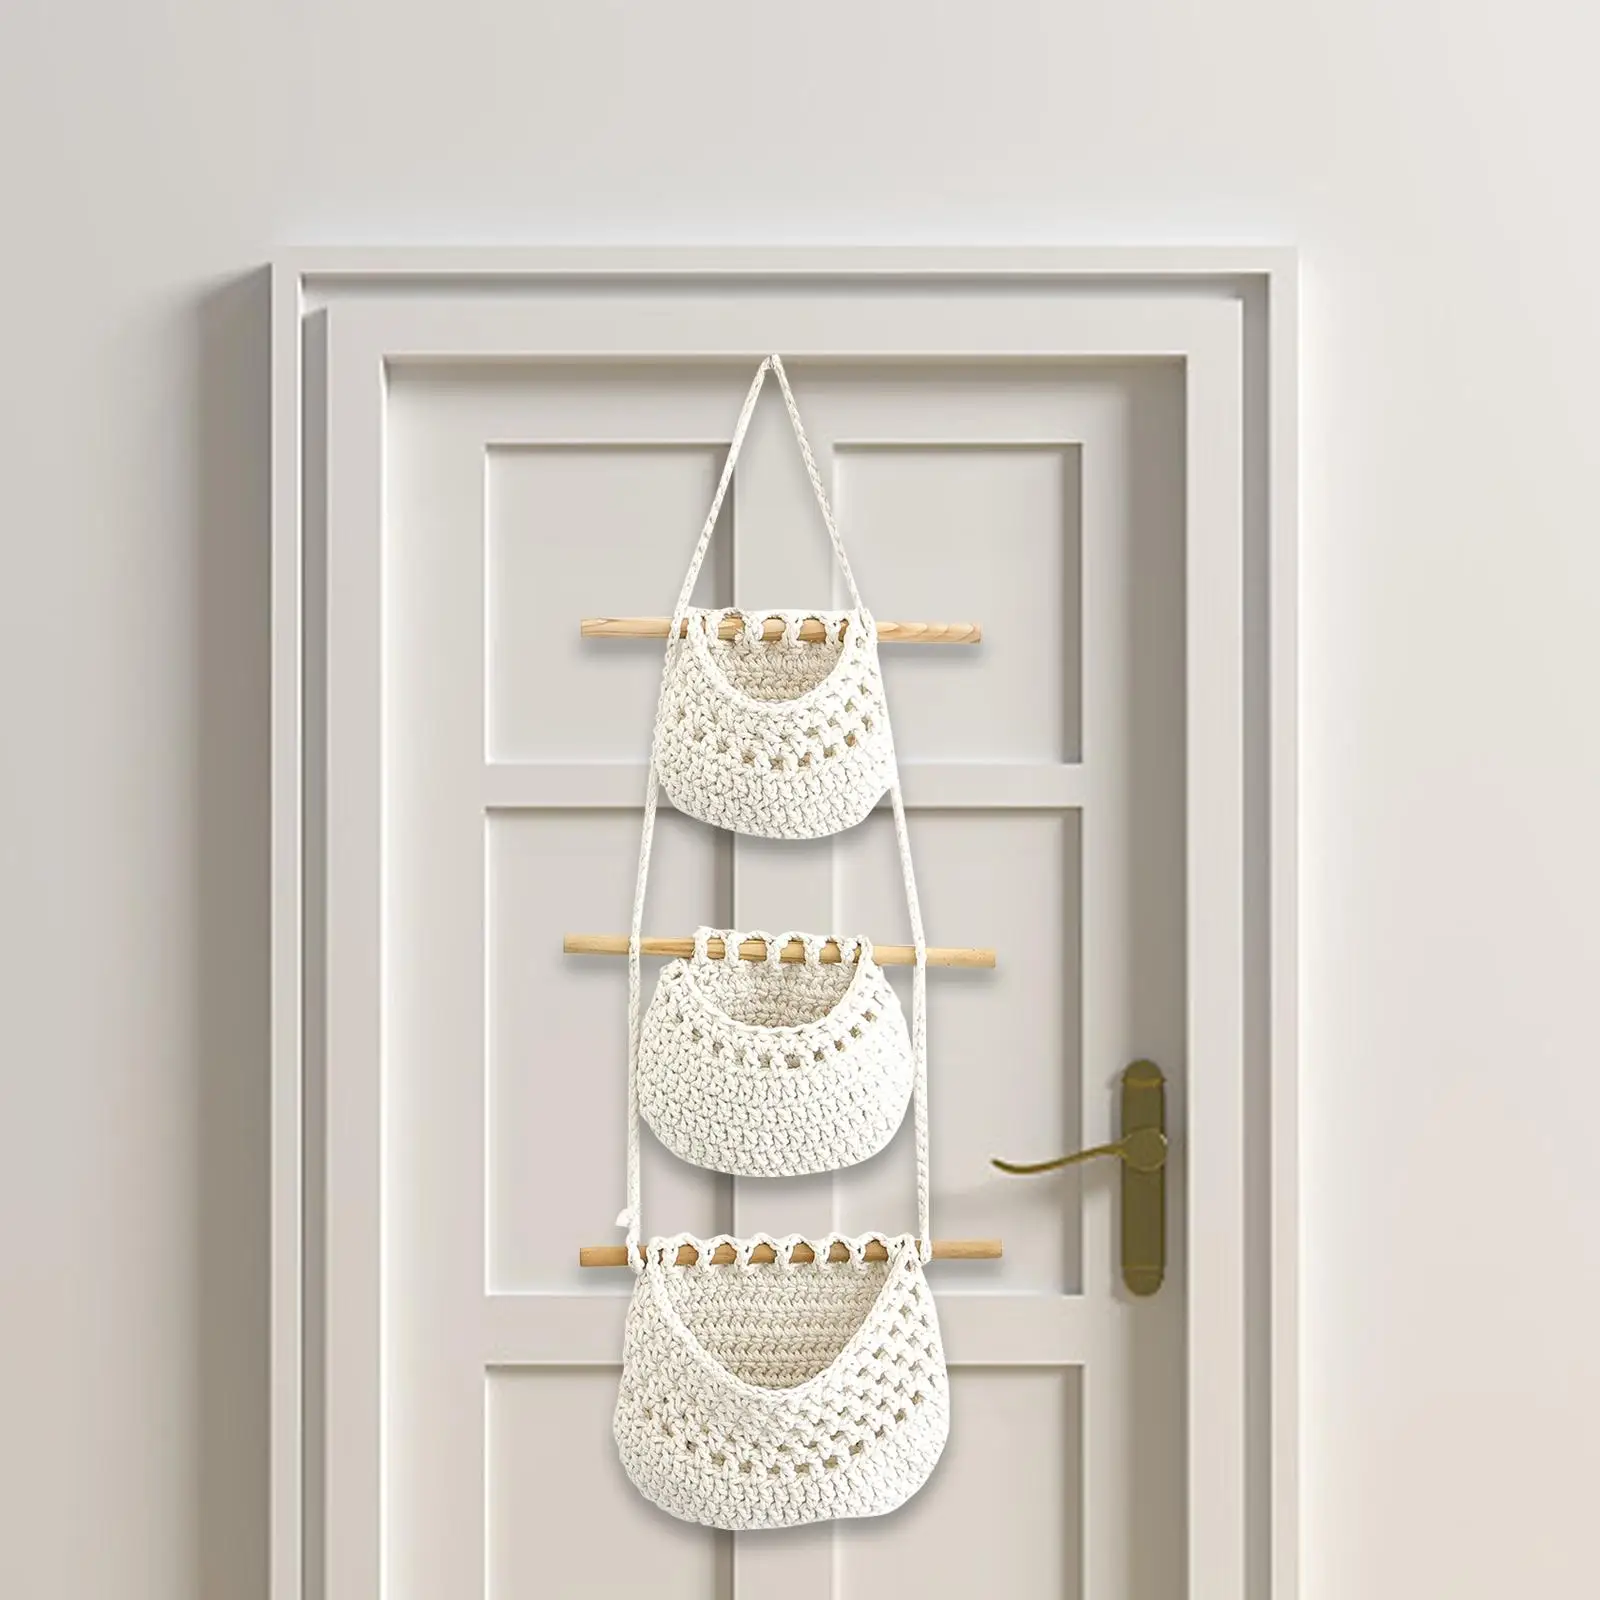 Hand Woven Hanging Wall Basket Wall Planter Holder Kitchen Organizer Boho Style